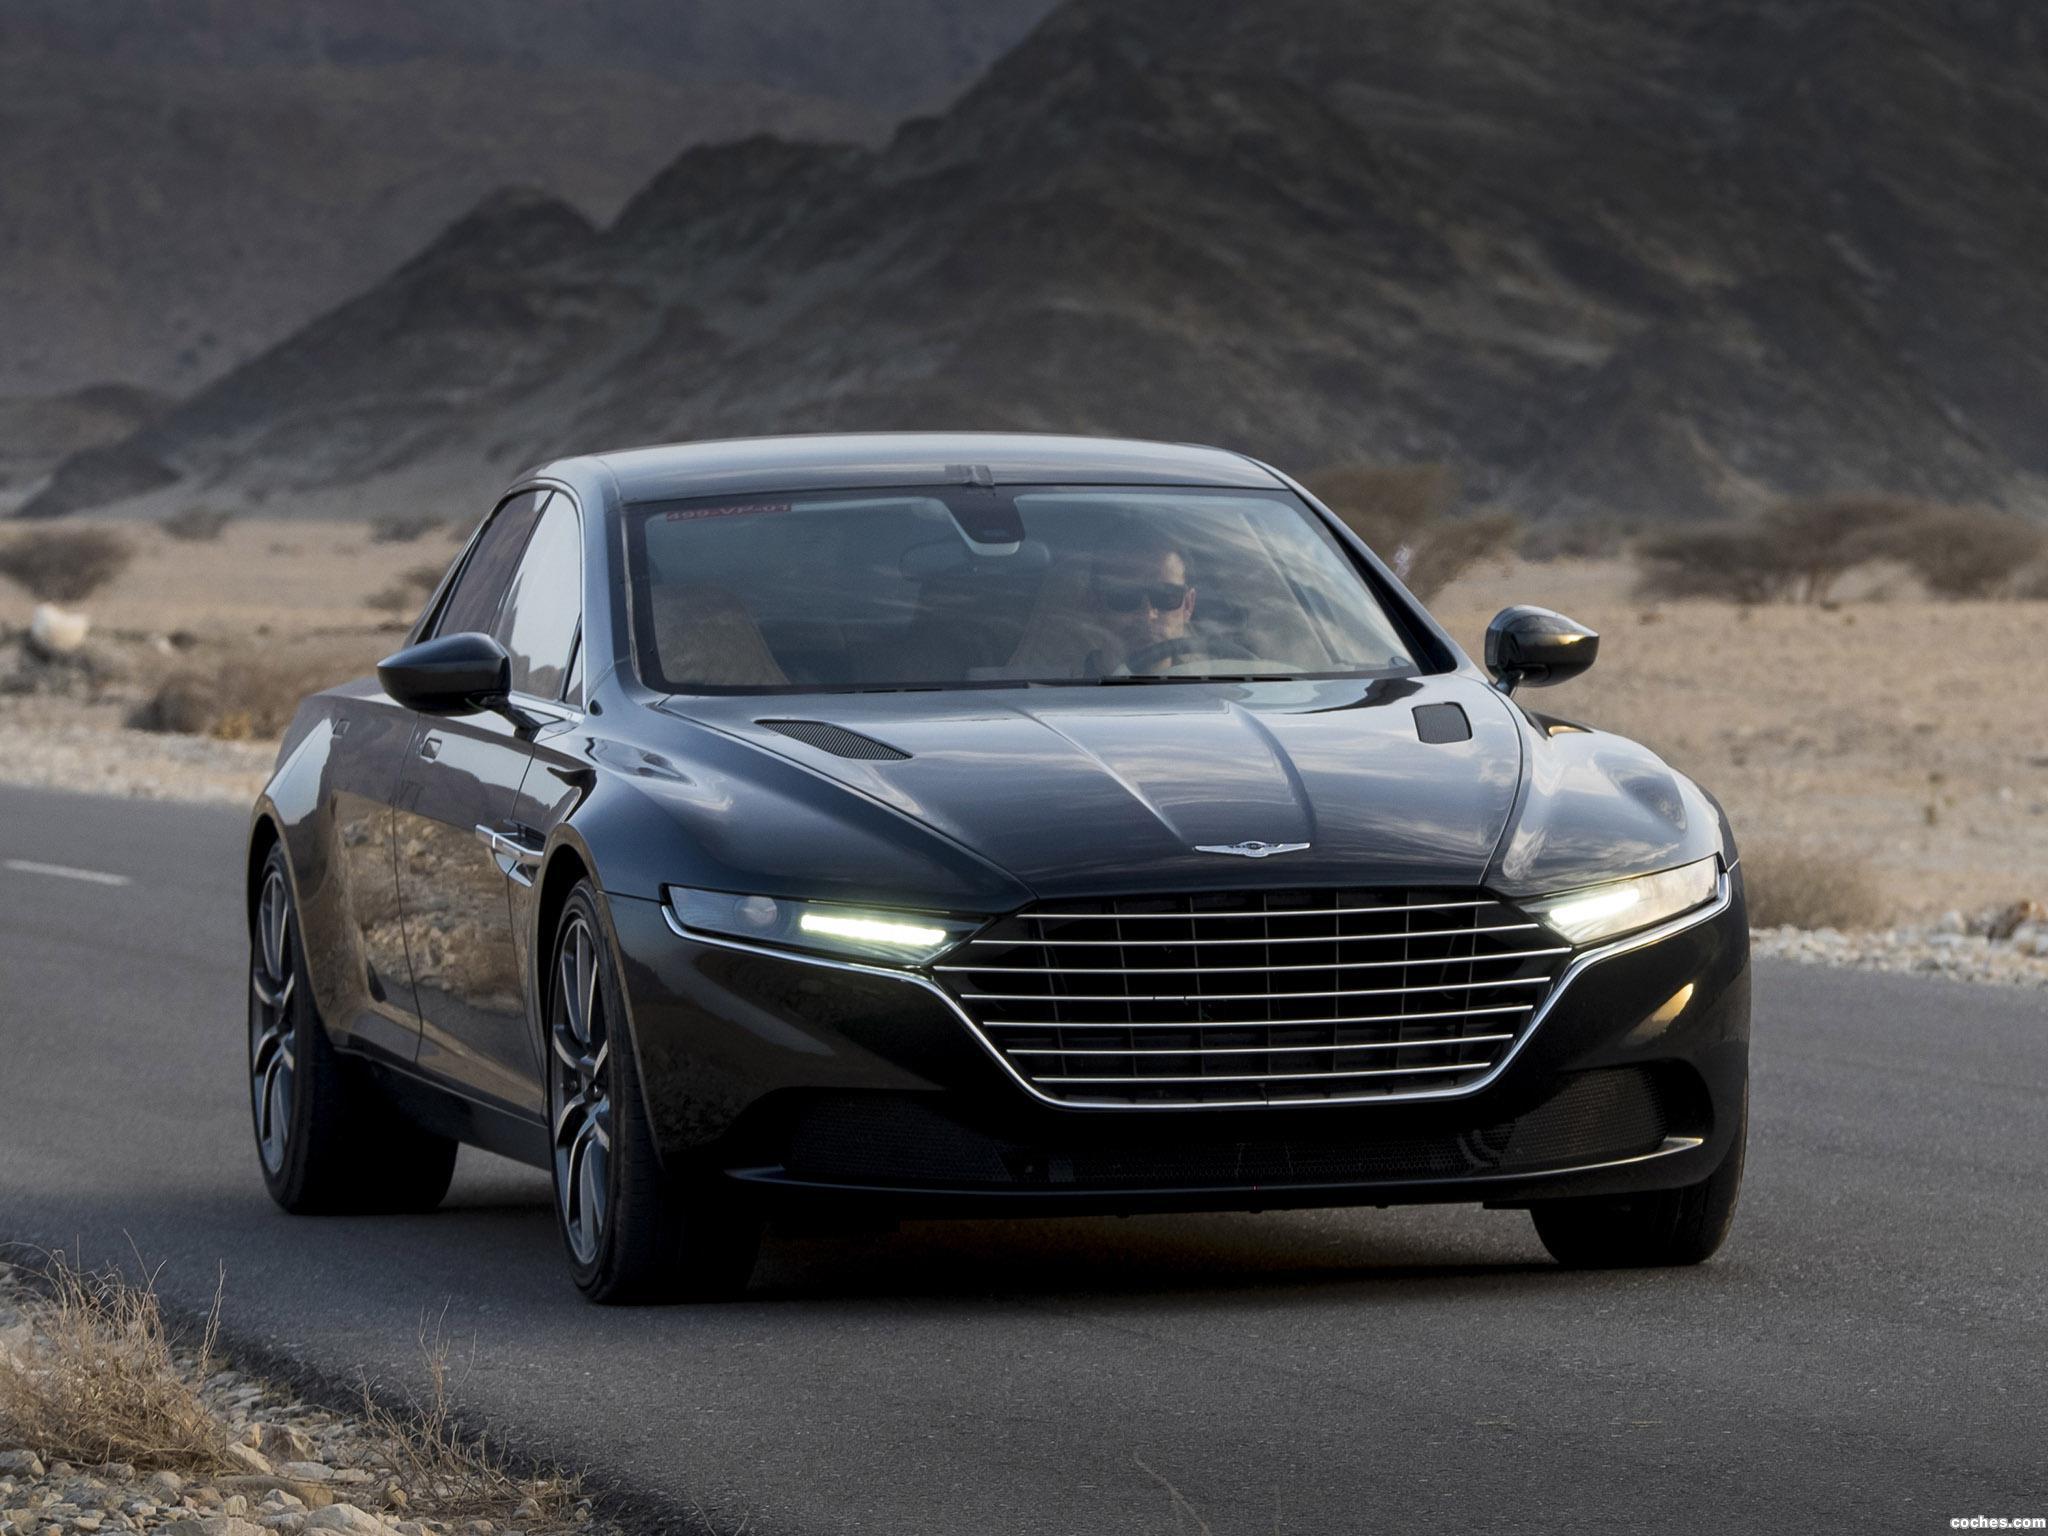 The Future Of Luxury: Introducing The 2014 Aston Martin Lagonda Prototype